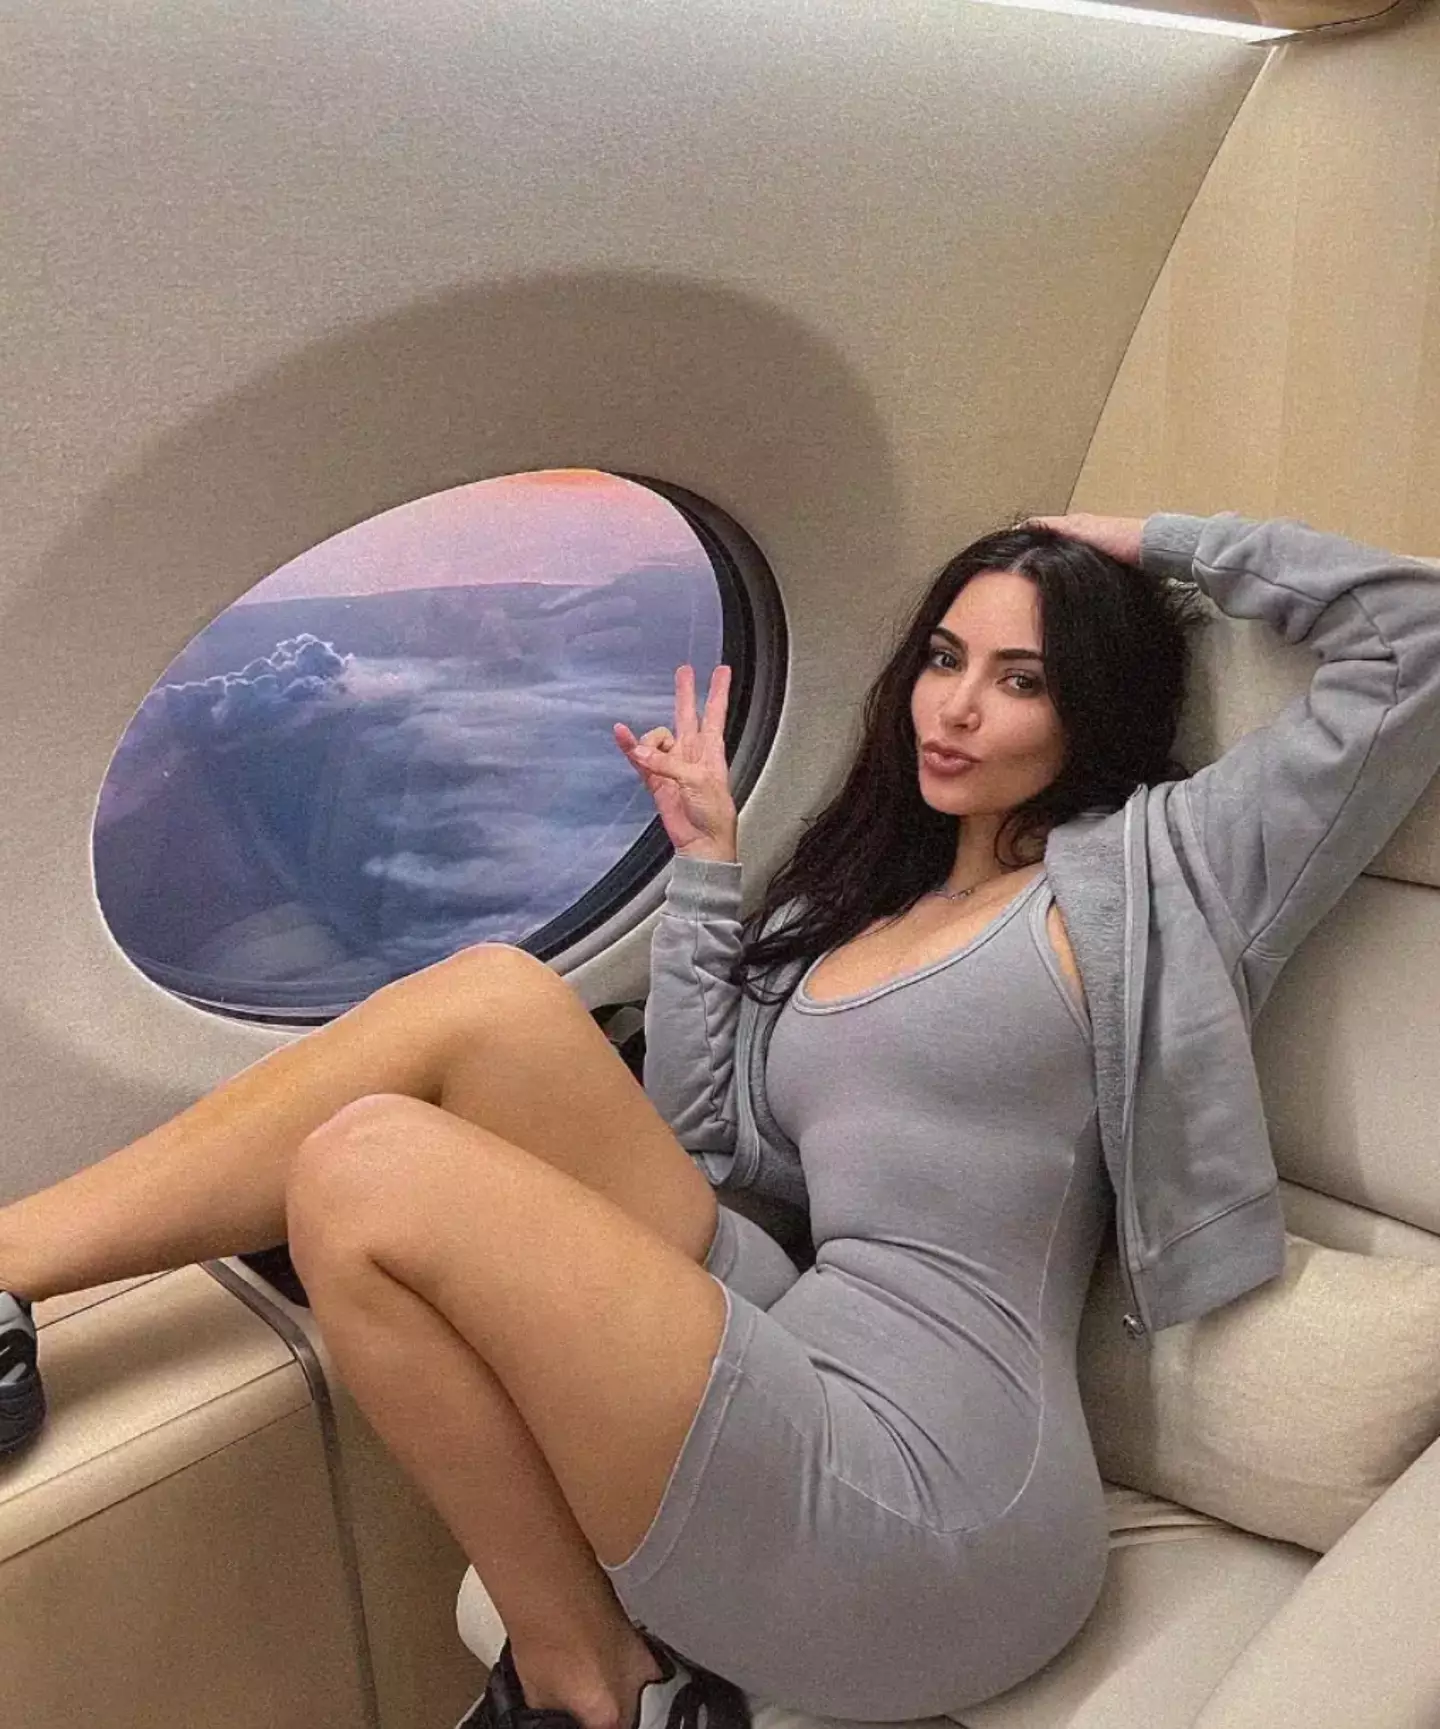 Kim Kardashian's jet set her back $150 million.